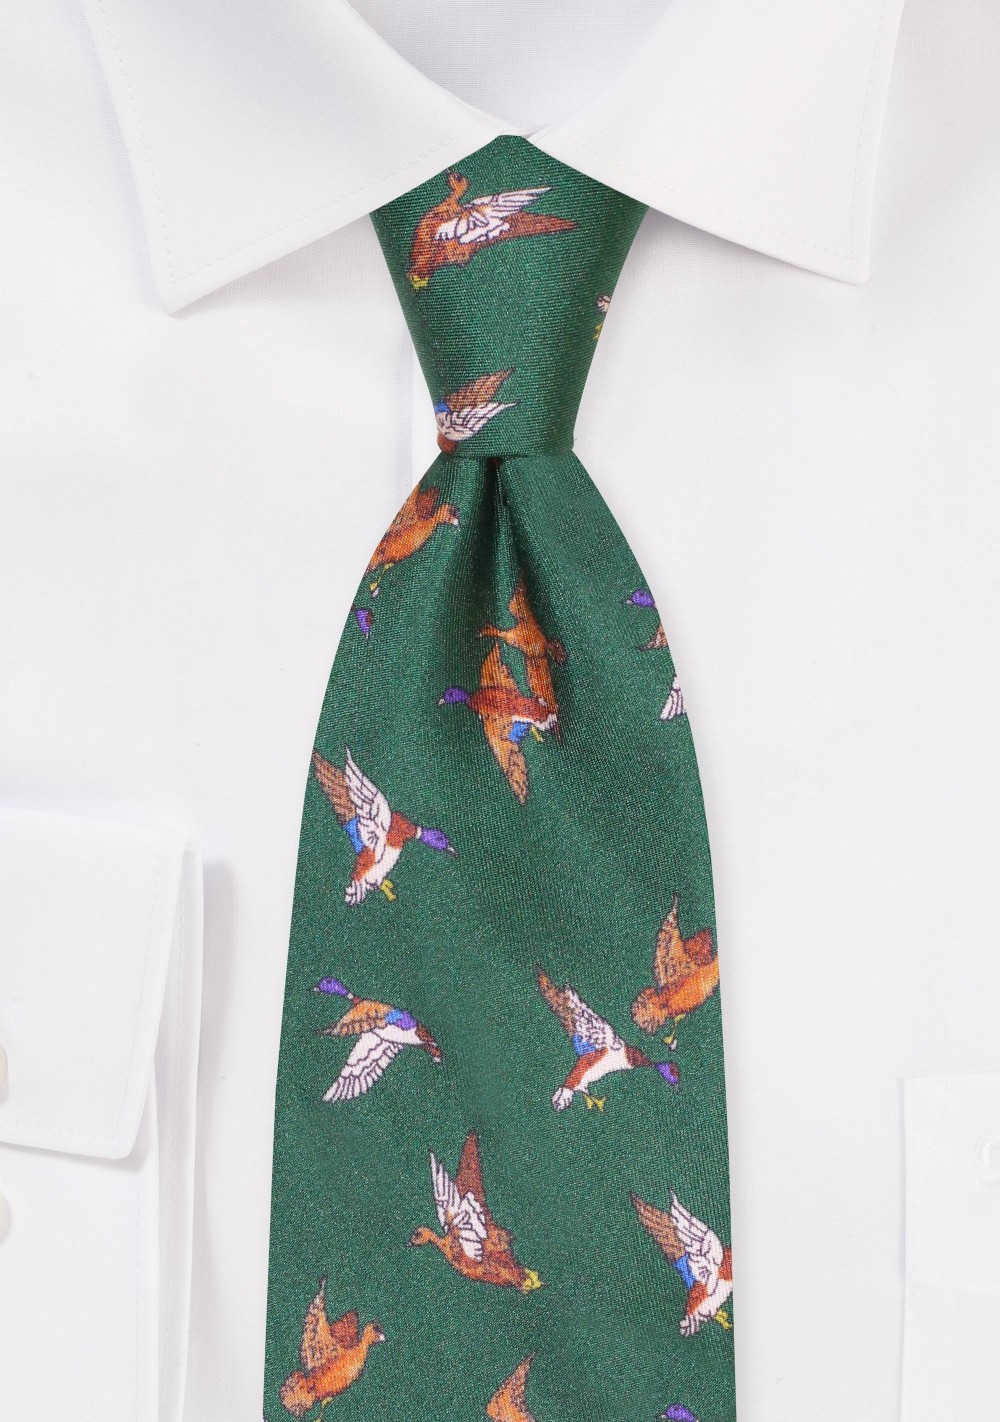 Hunter Green Silk Tie with Duck Print